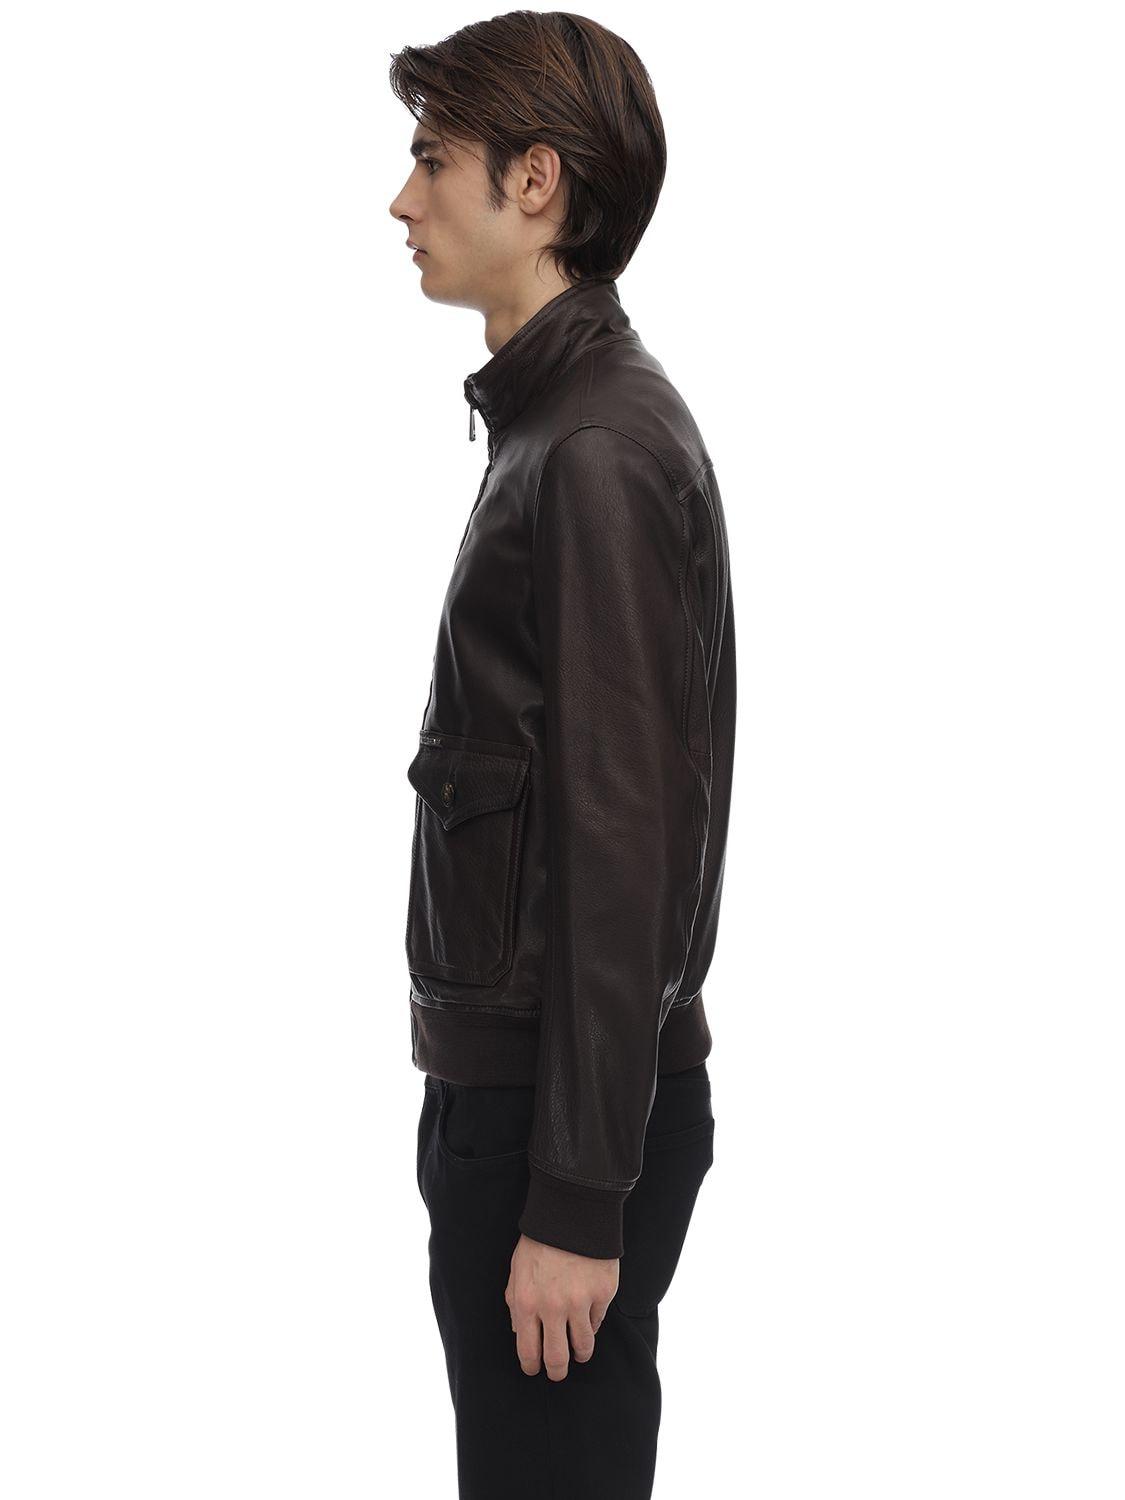 Belstaff Hughes Leather Bomber Jacket in Dark Brown (Black) for Men - Lyst